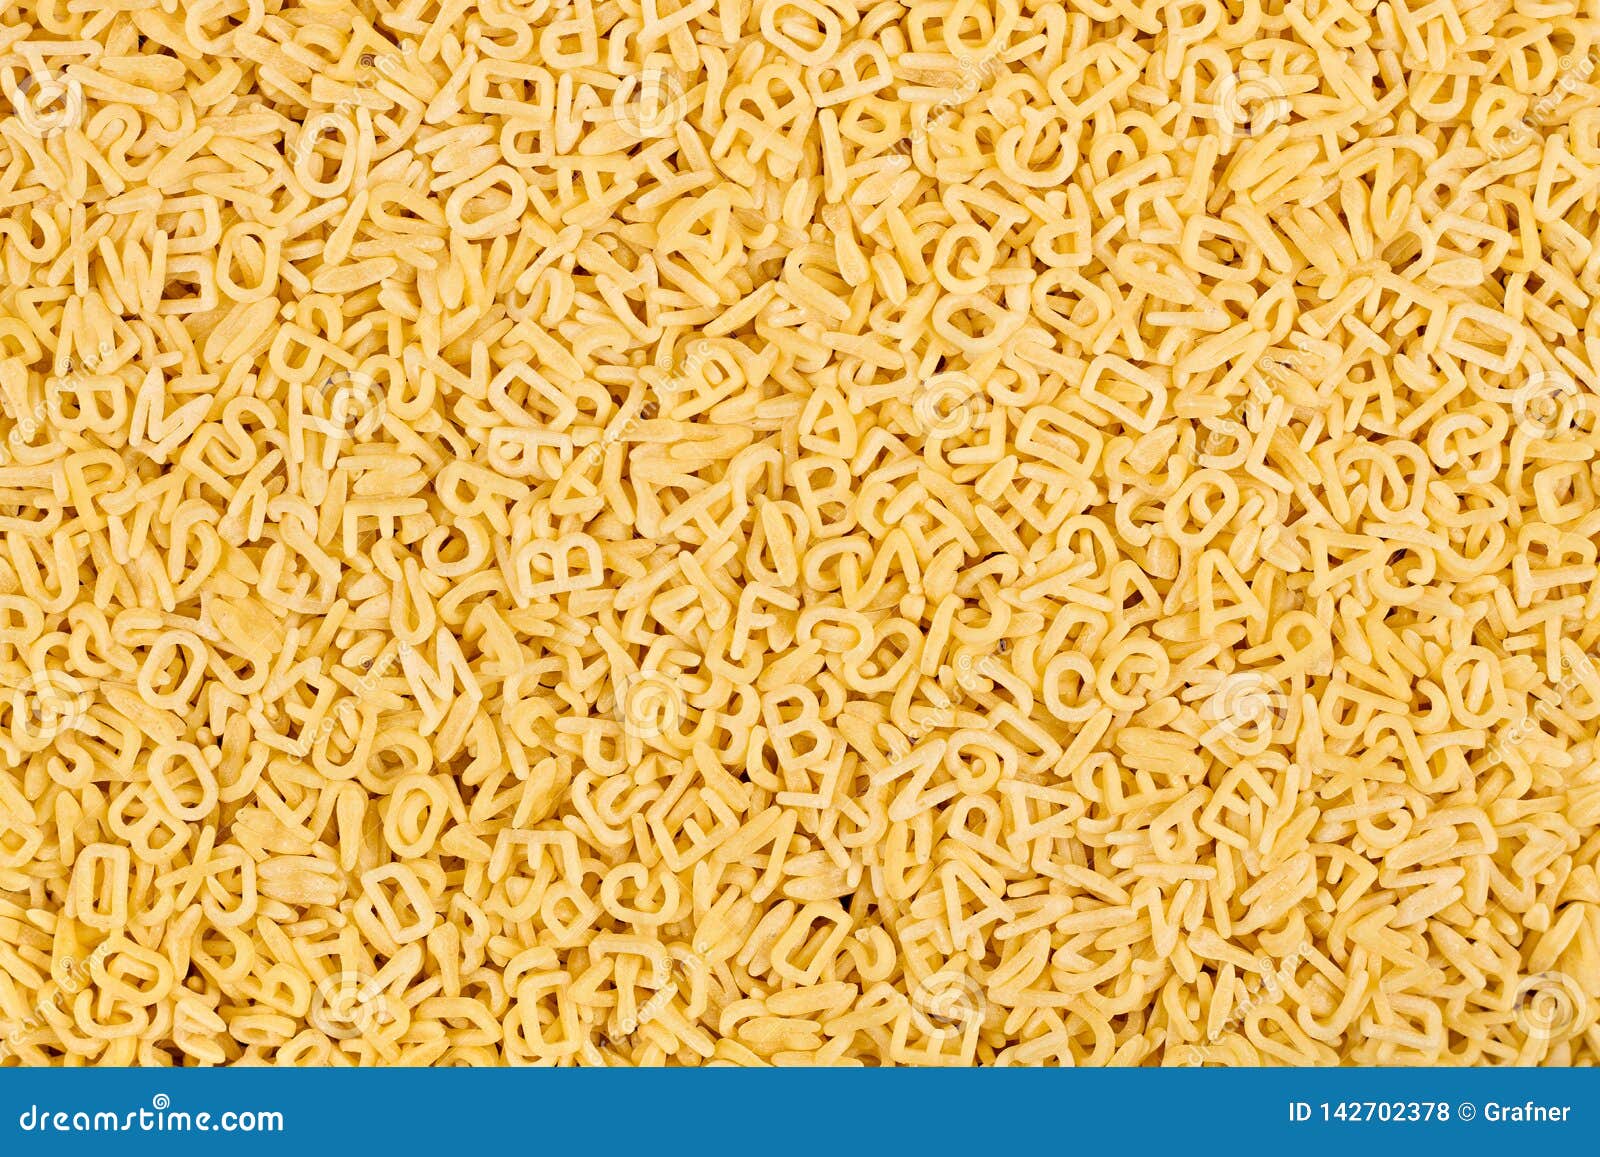 Texture Of Raw Alphabet Abc Letter Noodles Pasta Italian ...